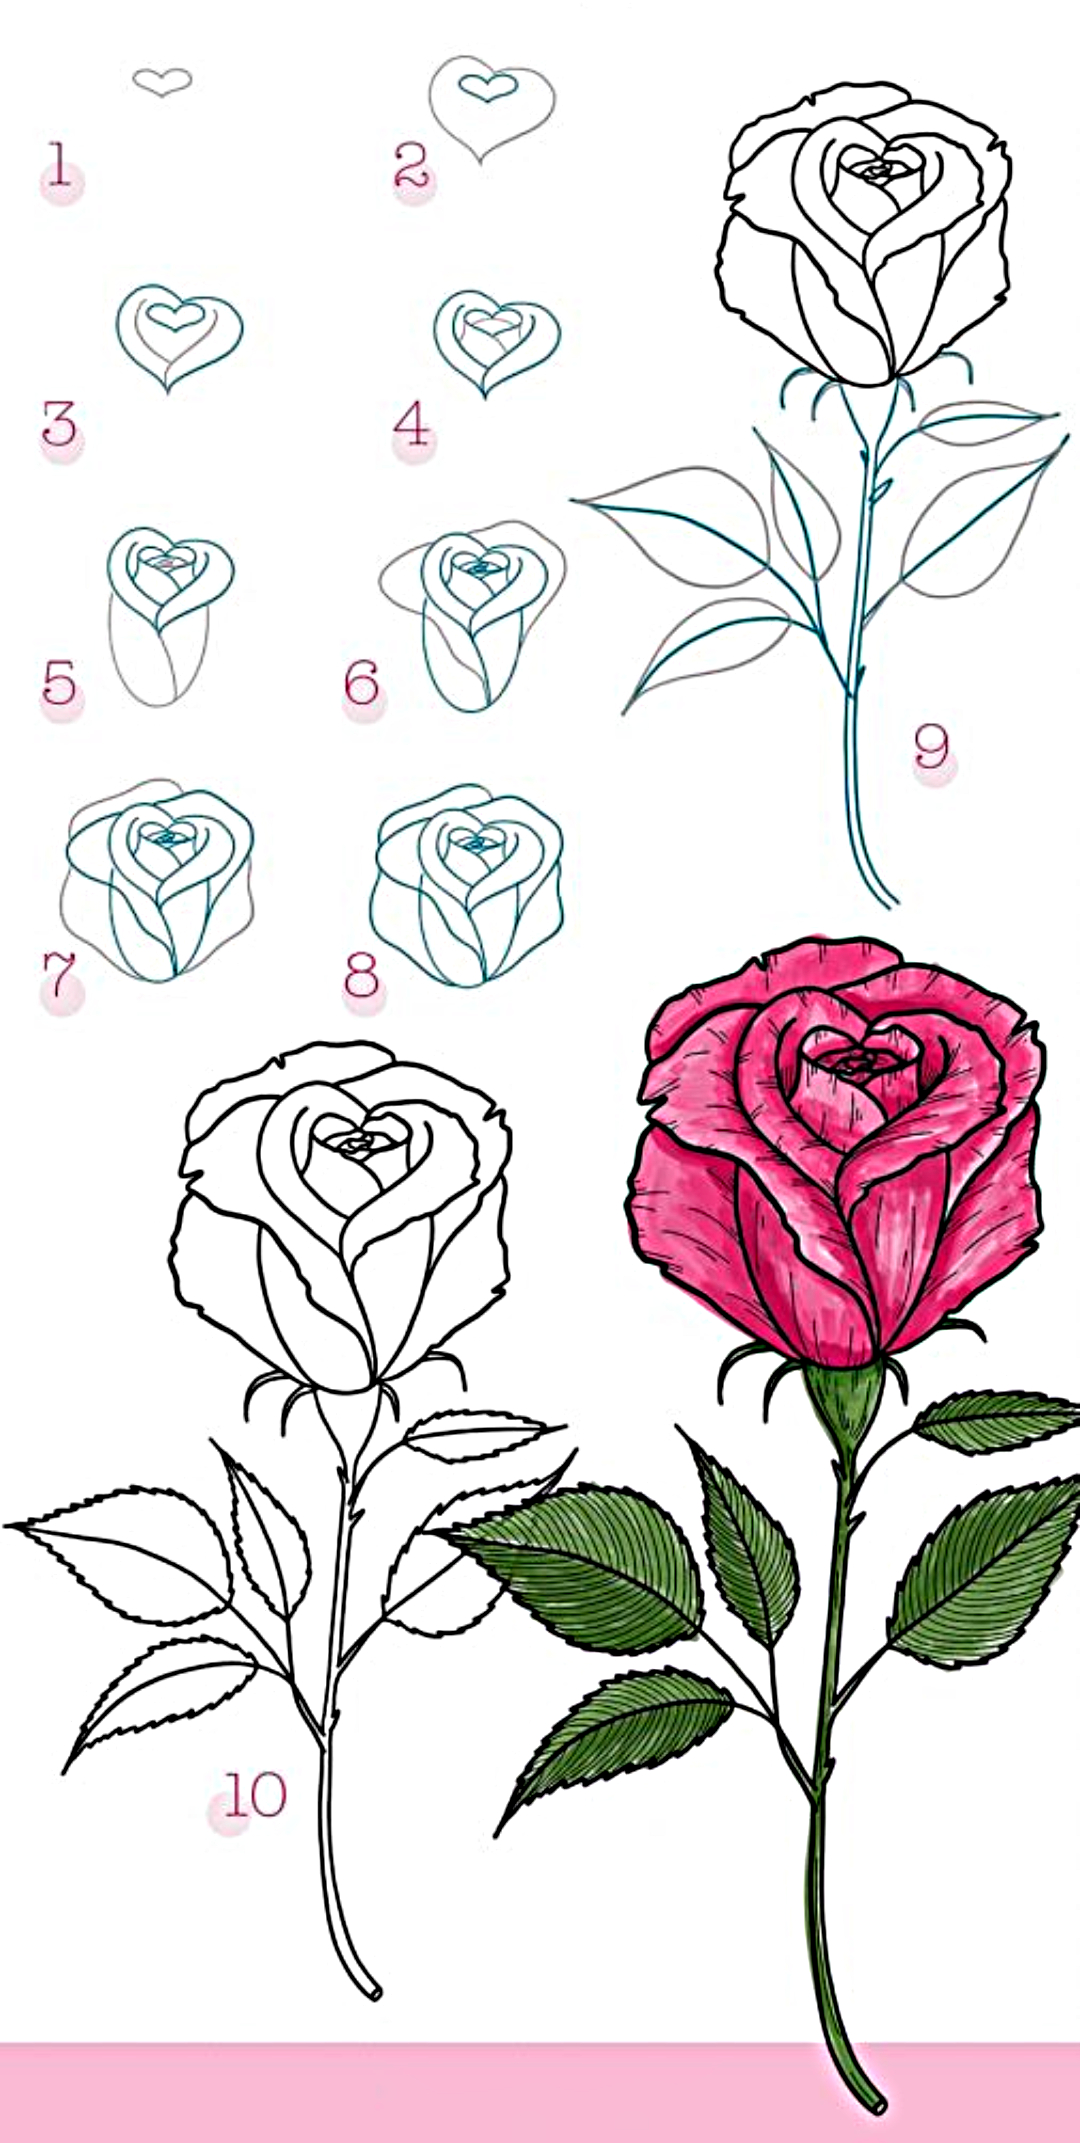 Vẽ hoa hồng tặng cô giáo 2011 siêu dễ lecongduytinh learnontiktok    TikTok